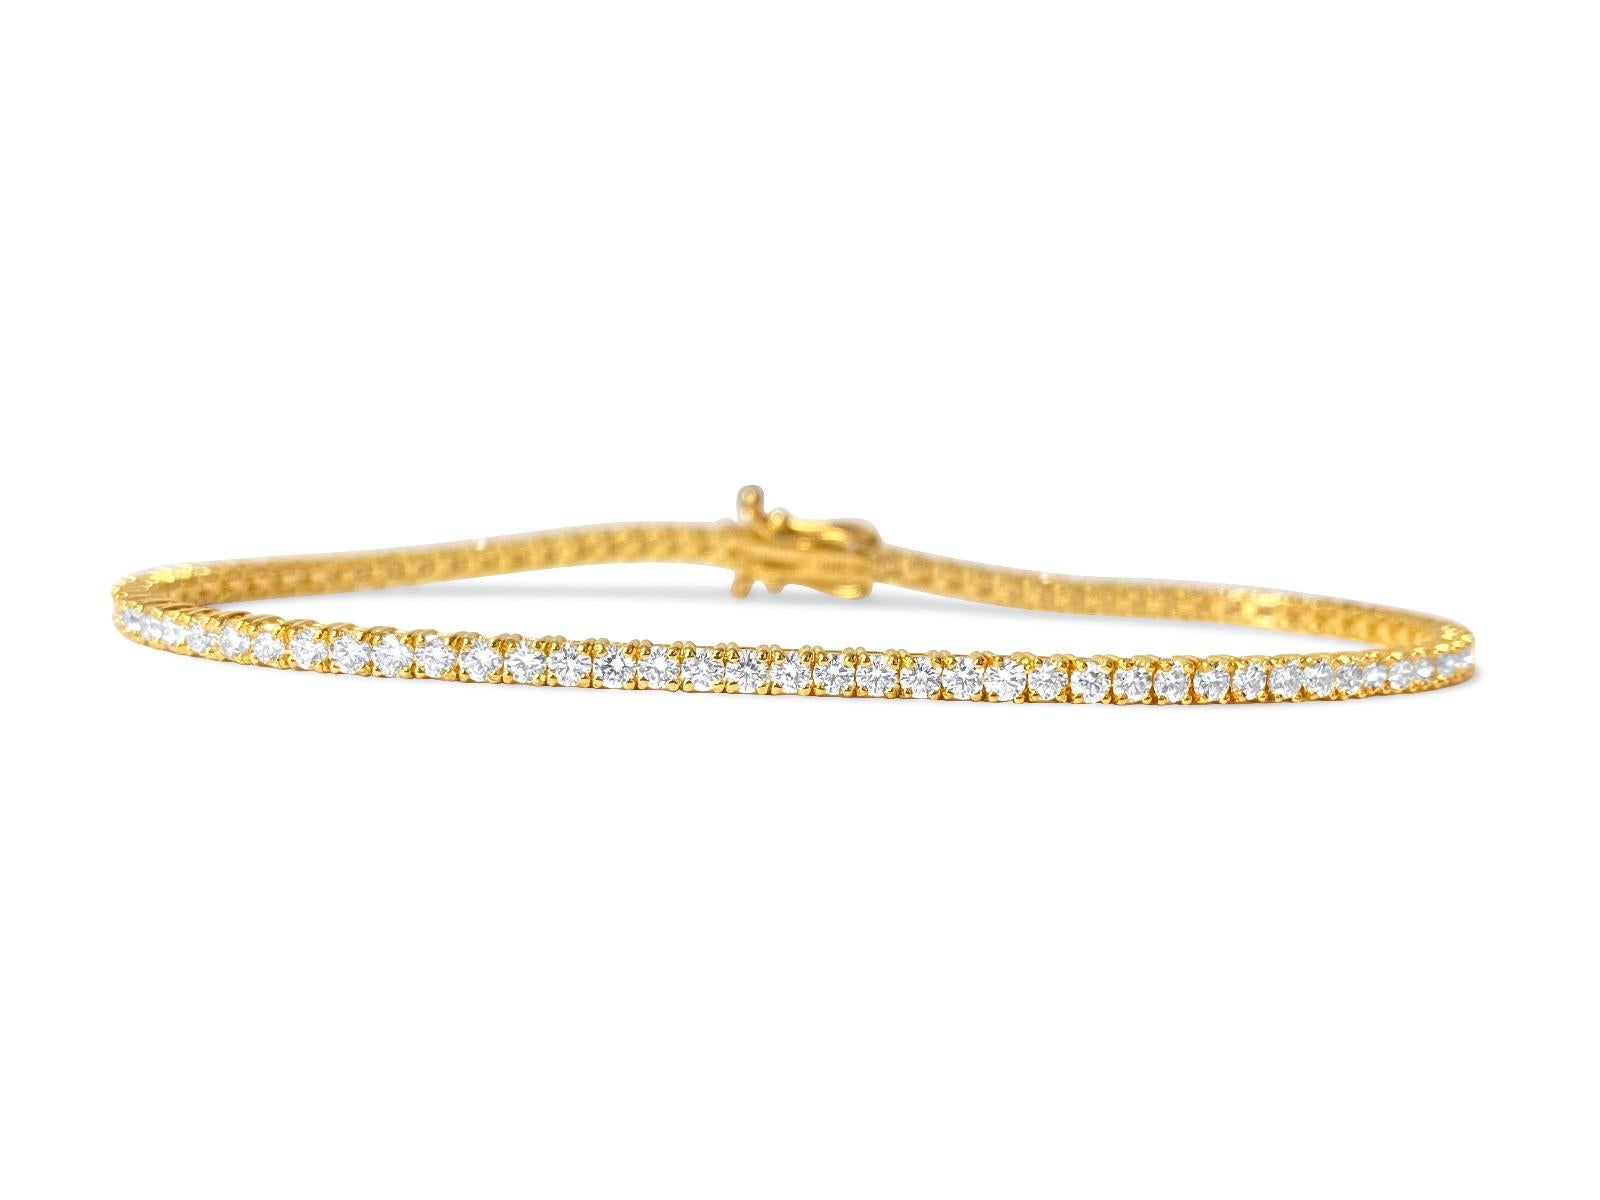 3.52 carat diamond tennis bracelet 
VVS clarity Natural diamonds 
H-I Color 